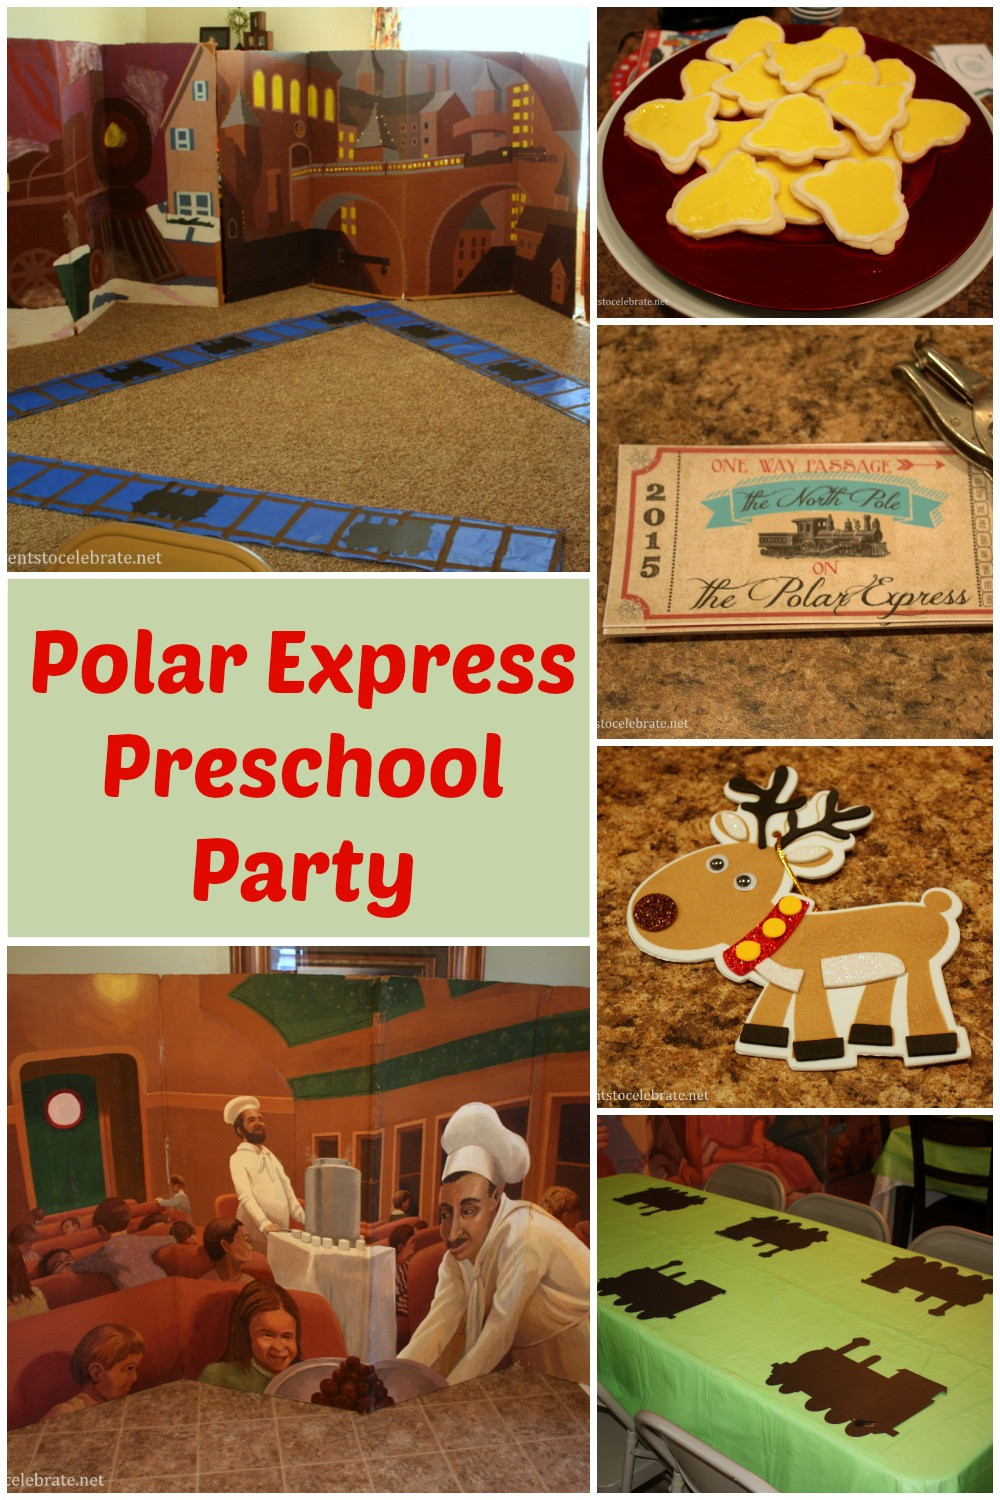 Polar Express Birthday Party
 Polar Express Party for Preschool events to CELEBRATE